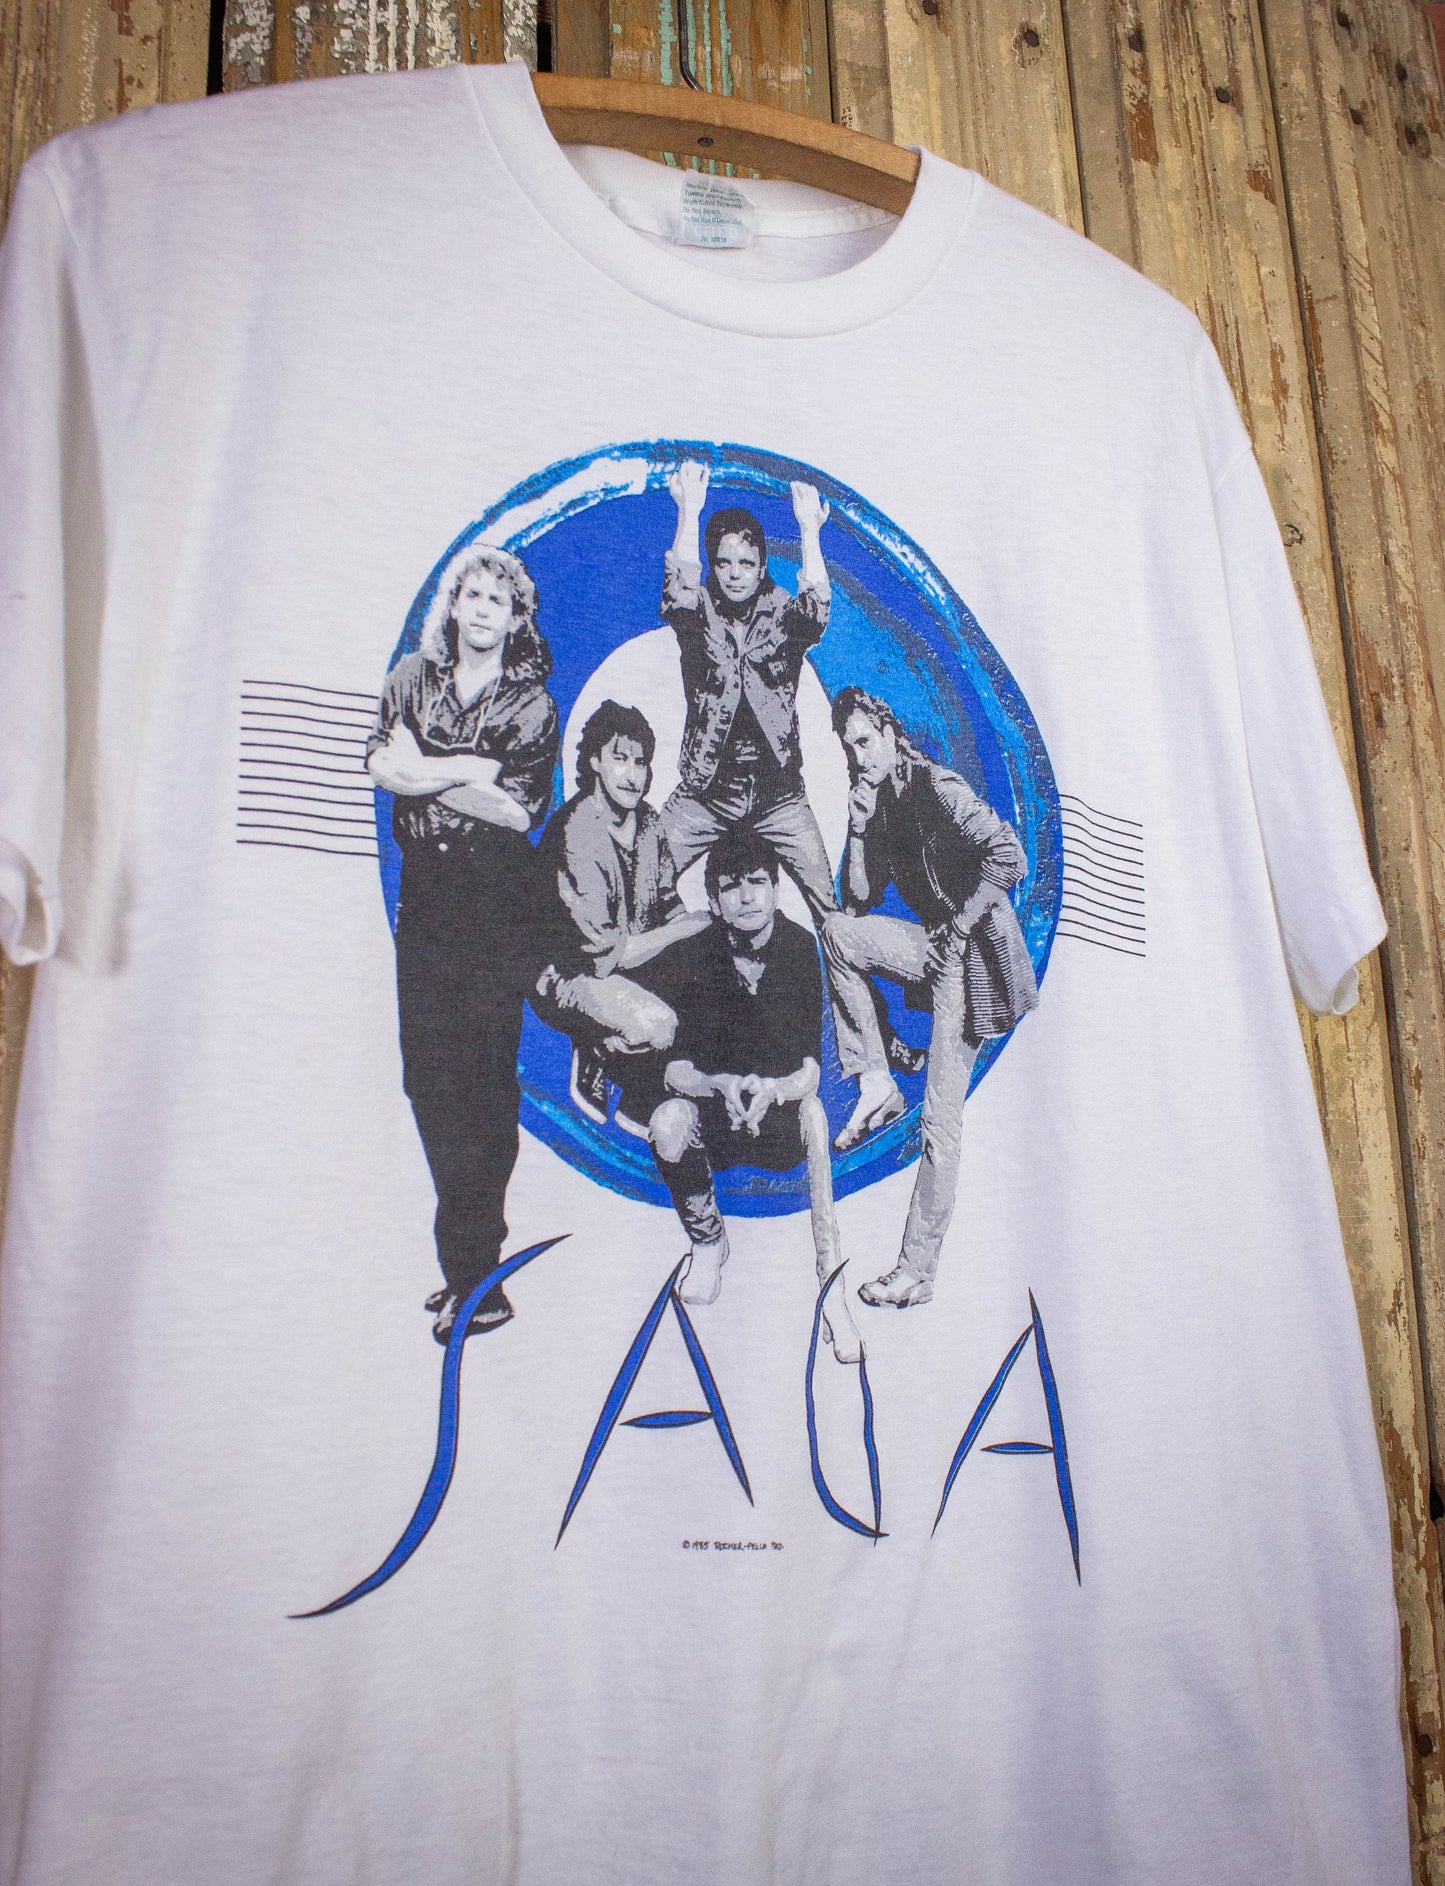 Vintage Saga Behaviour World Tour Concert T Shirt 1985-86 White Large